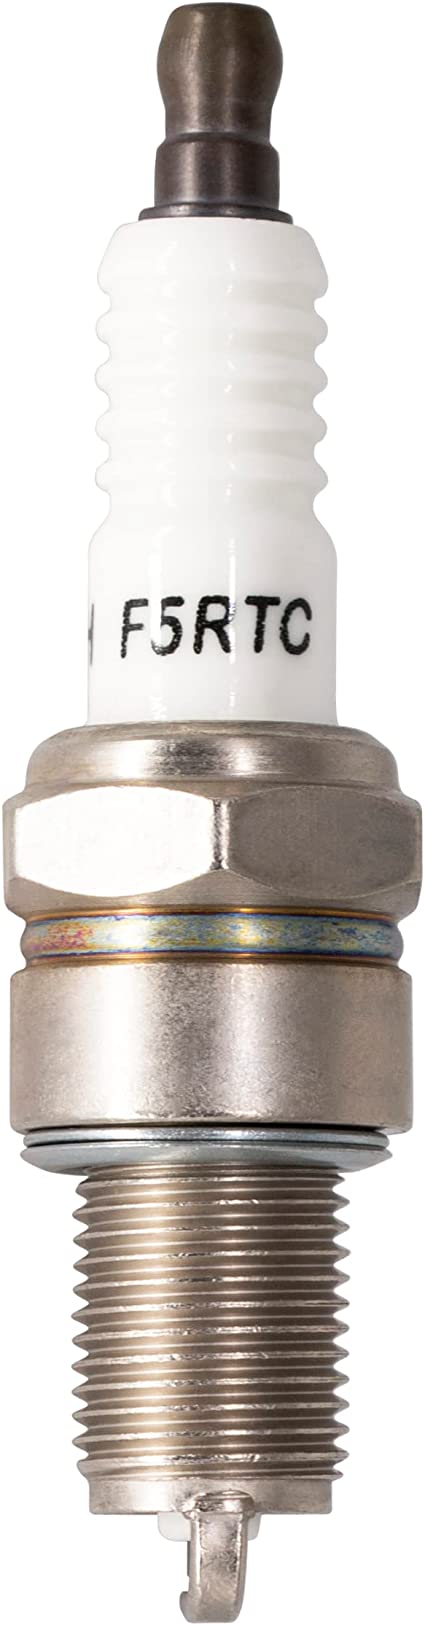 951-14437 (F5RTC) Spark Plug